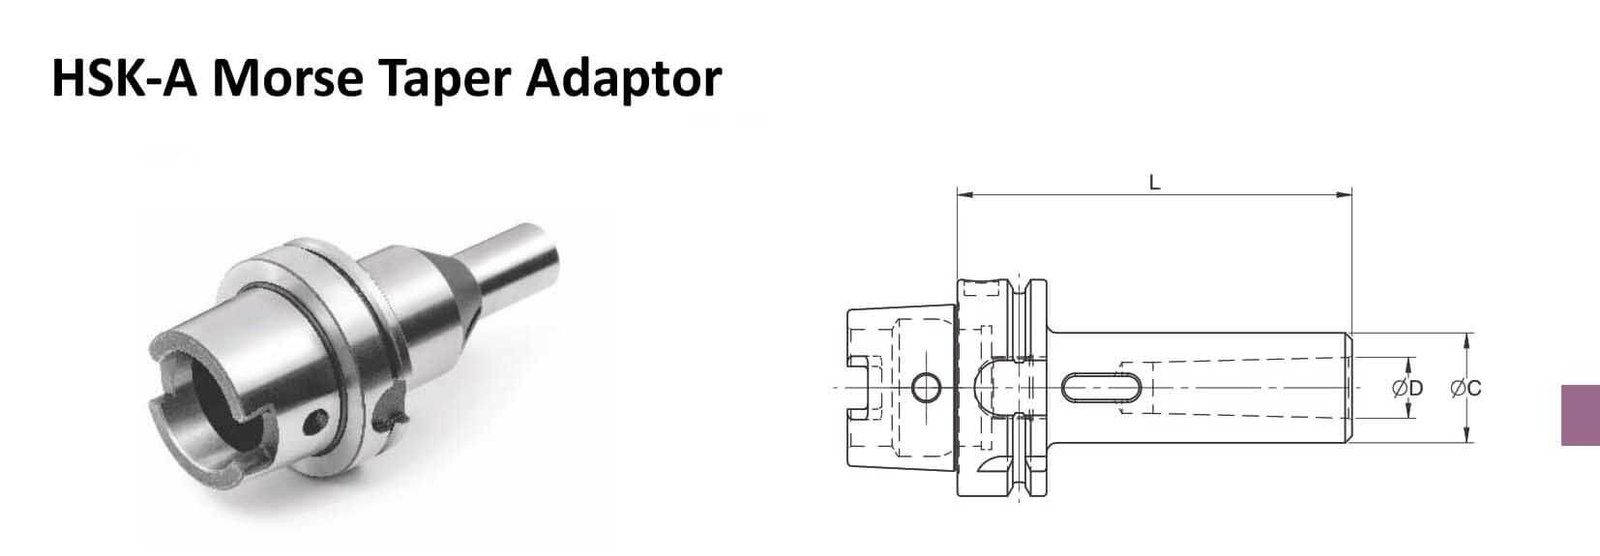 HSK-A 40 MT 01 - 3.74 Morse Taper Adapter (Balanced to 2.5G 25000 RPM) (DIN 6383)